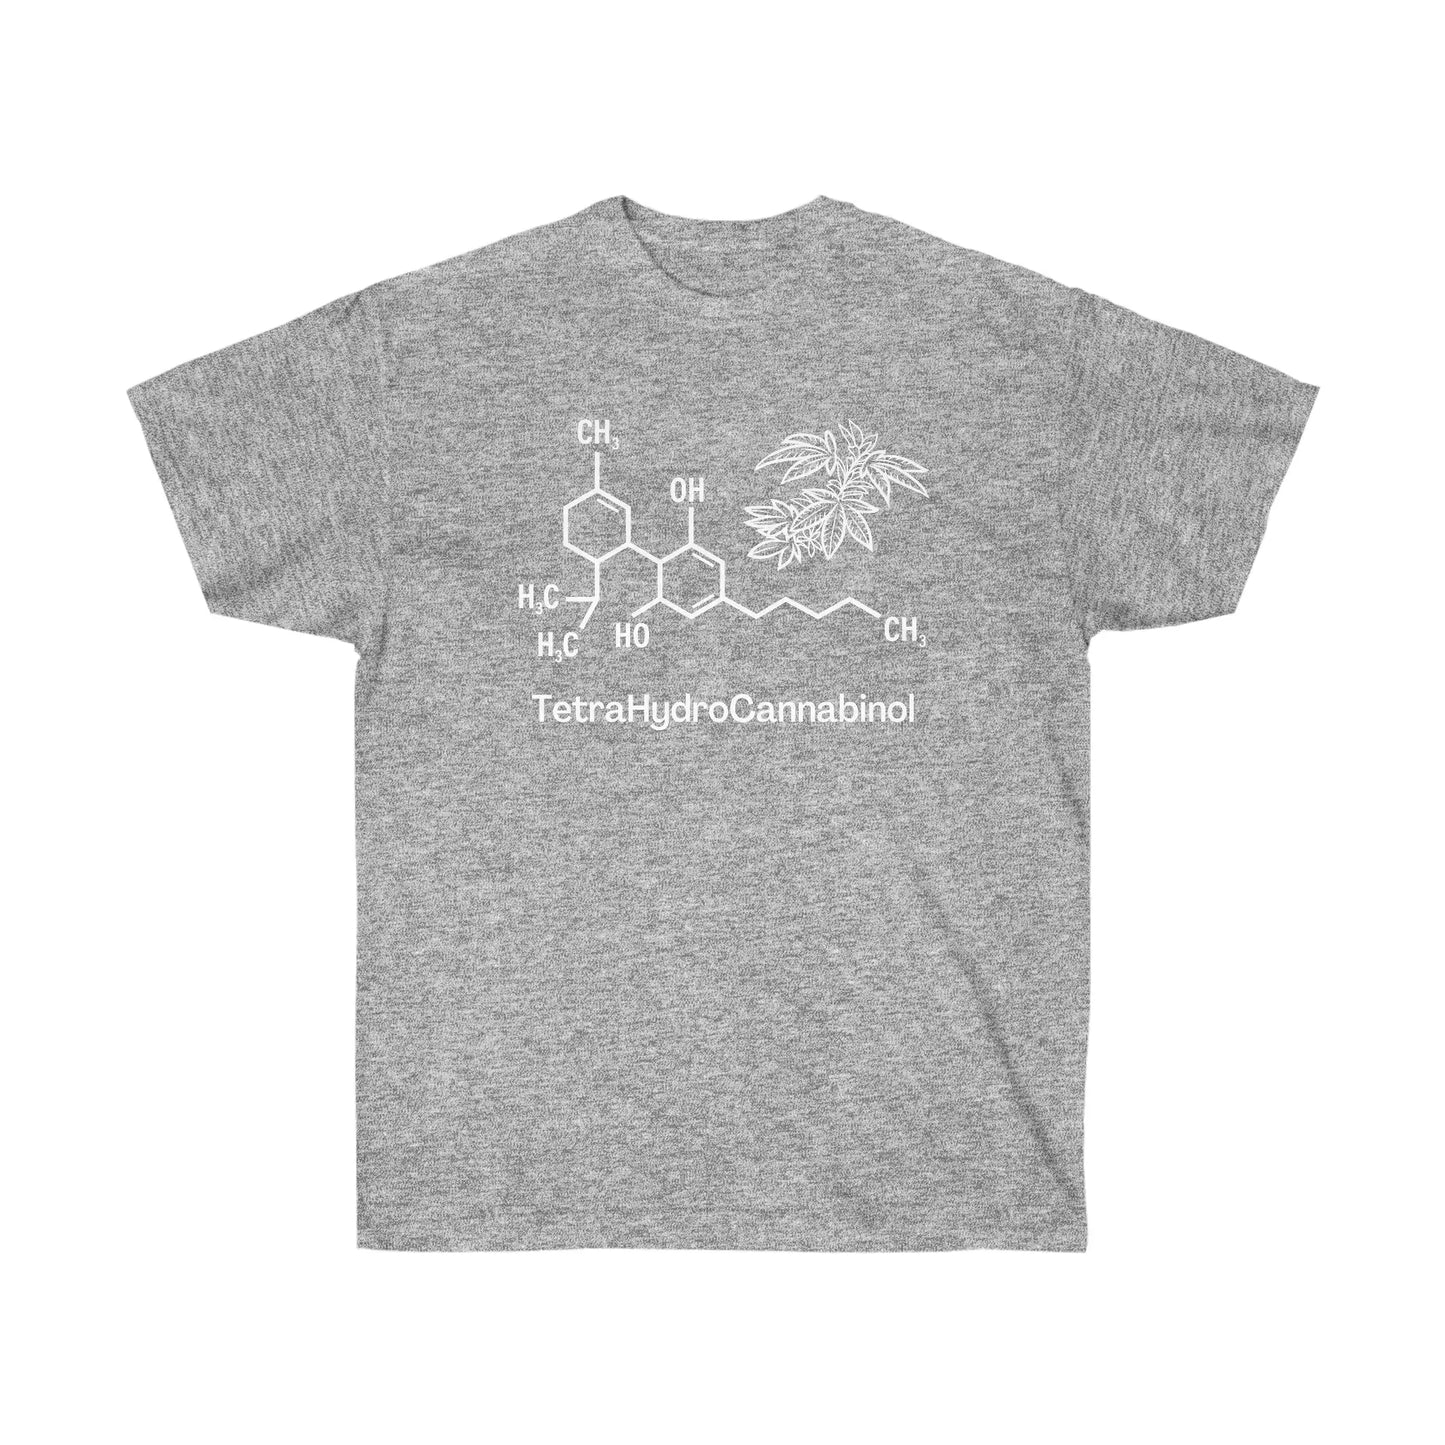 Tetrahydrocannabinol (THC) Molecule Ultra Cotton Weed Shirt